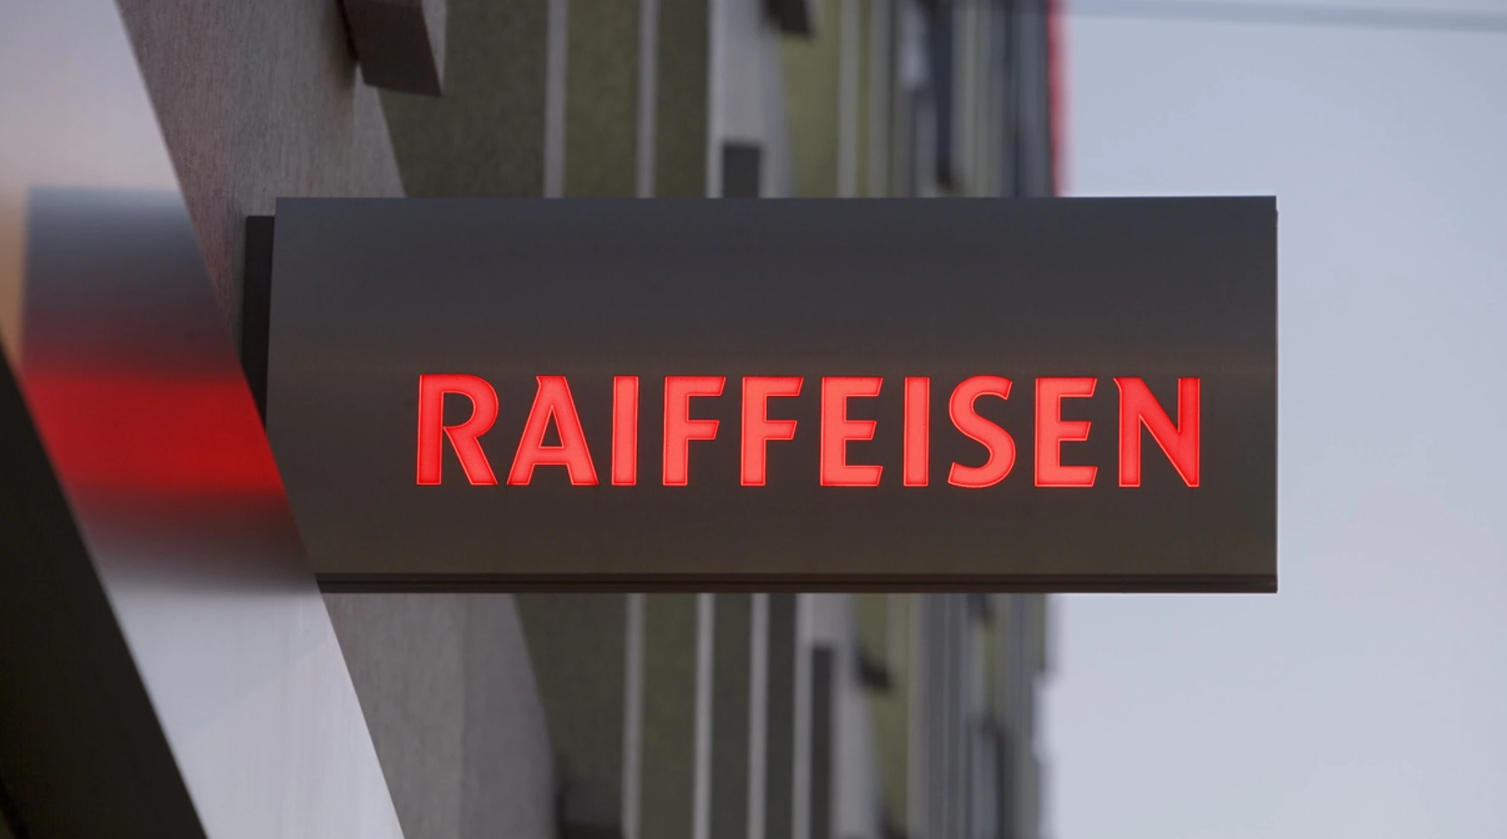 Raiffeisen банк Швейцарии. Swiss Raiffeisen Group. Raiffeisen Швейцария банк логотип. Raiffeisen Bank закрыл корсчета всем банкам из России, кроме своей "Дочки". Lost bank